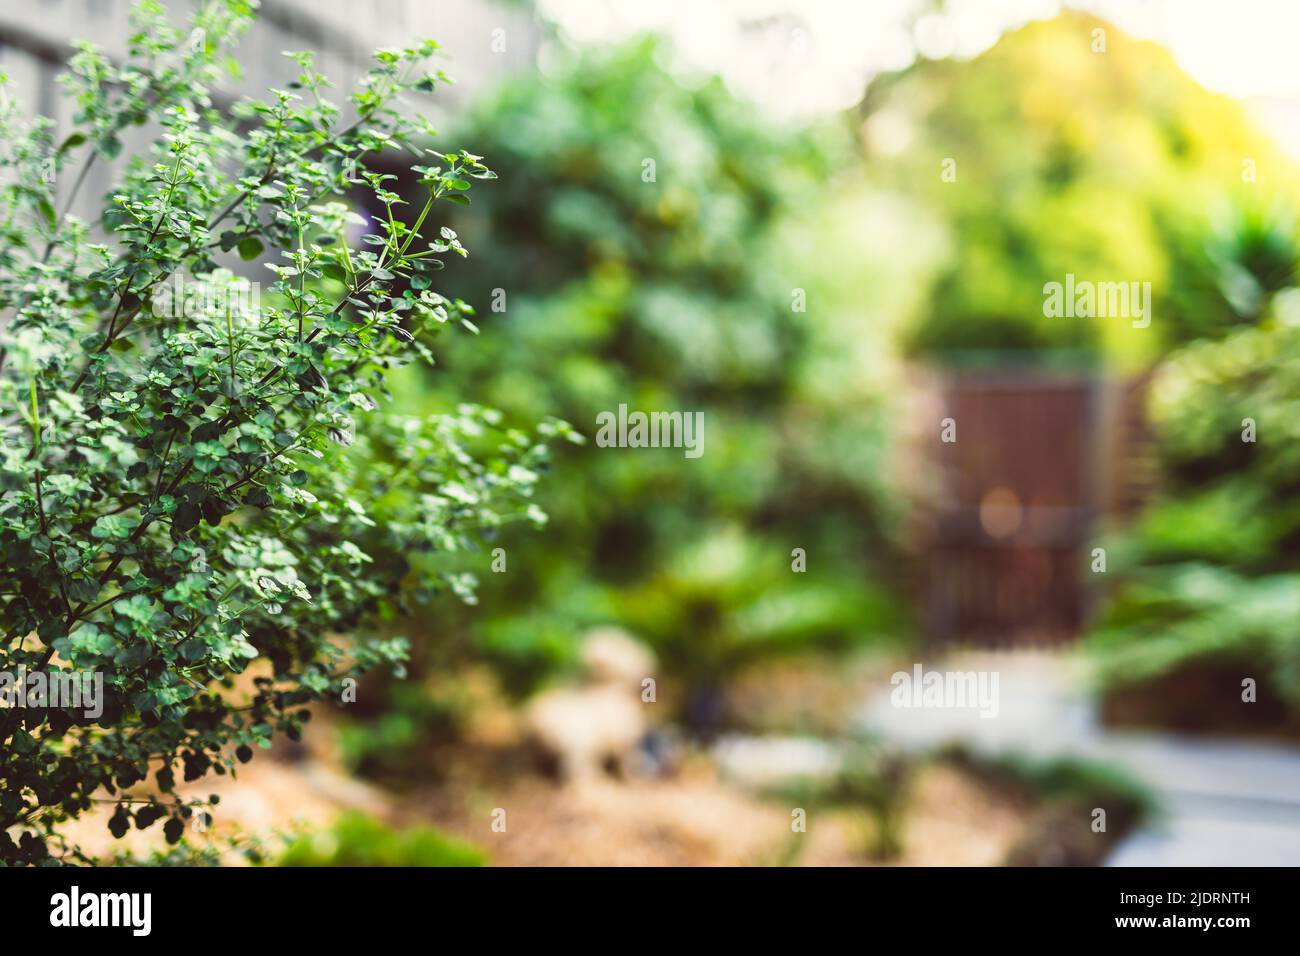 Australian native oregano prostanthera rotundifolia mint bush surrounded by idyllic sunny backyard with lots of tropical Australian native plants shot Stock Photo